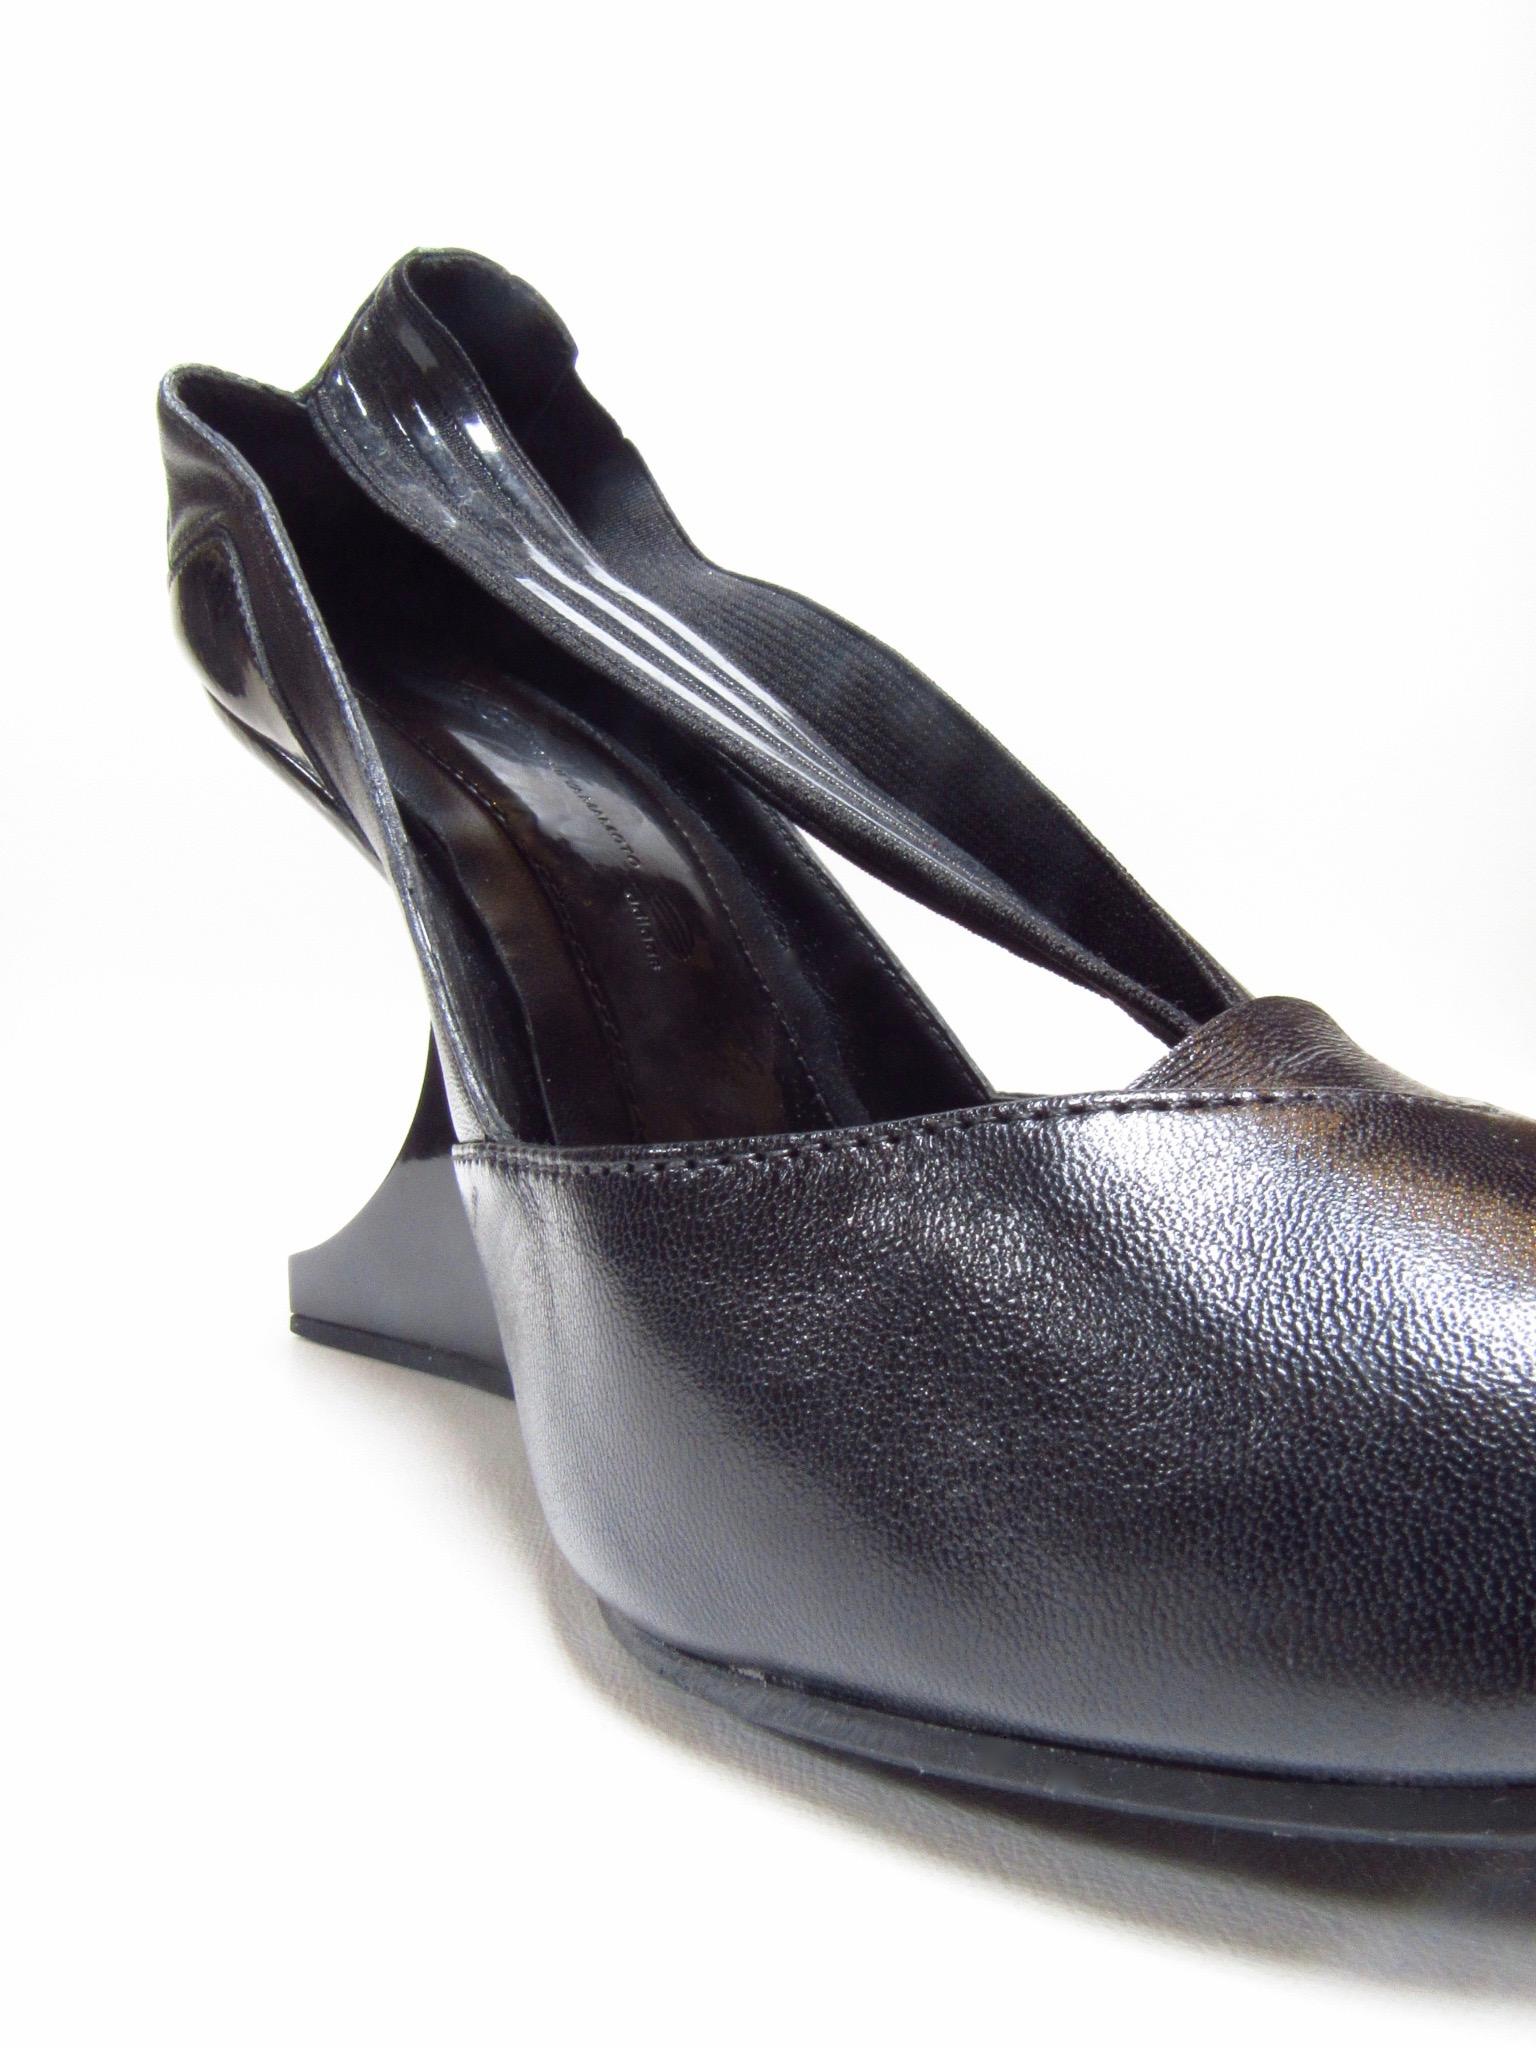 Noir Y-3 by Yohji Yamamoto 2007 Collection Curved Wedge Heels (talons compensés incurvés) en vente